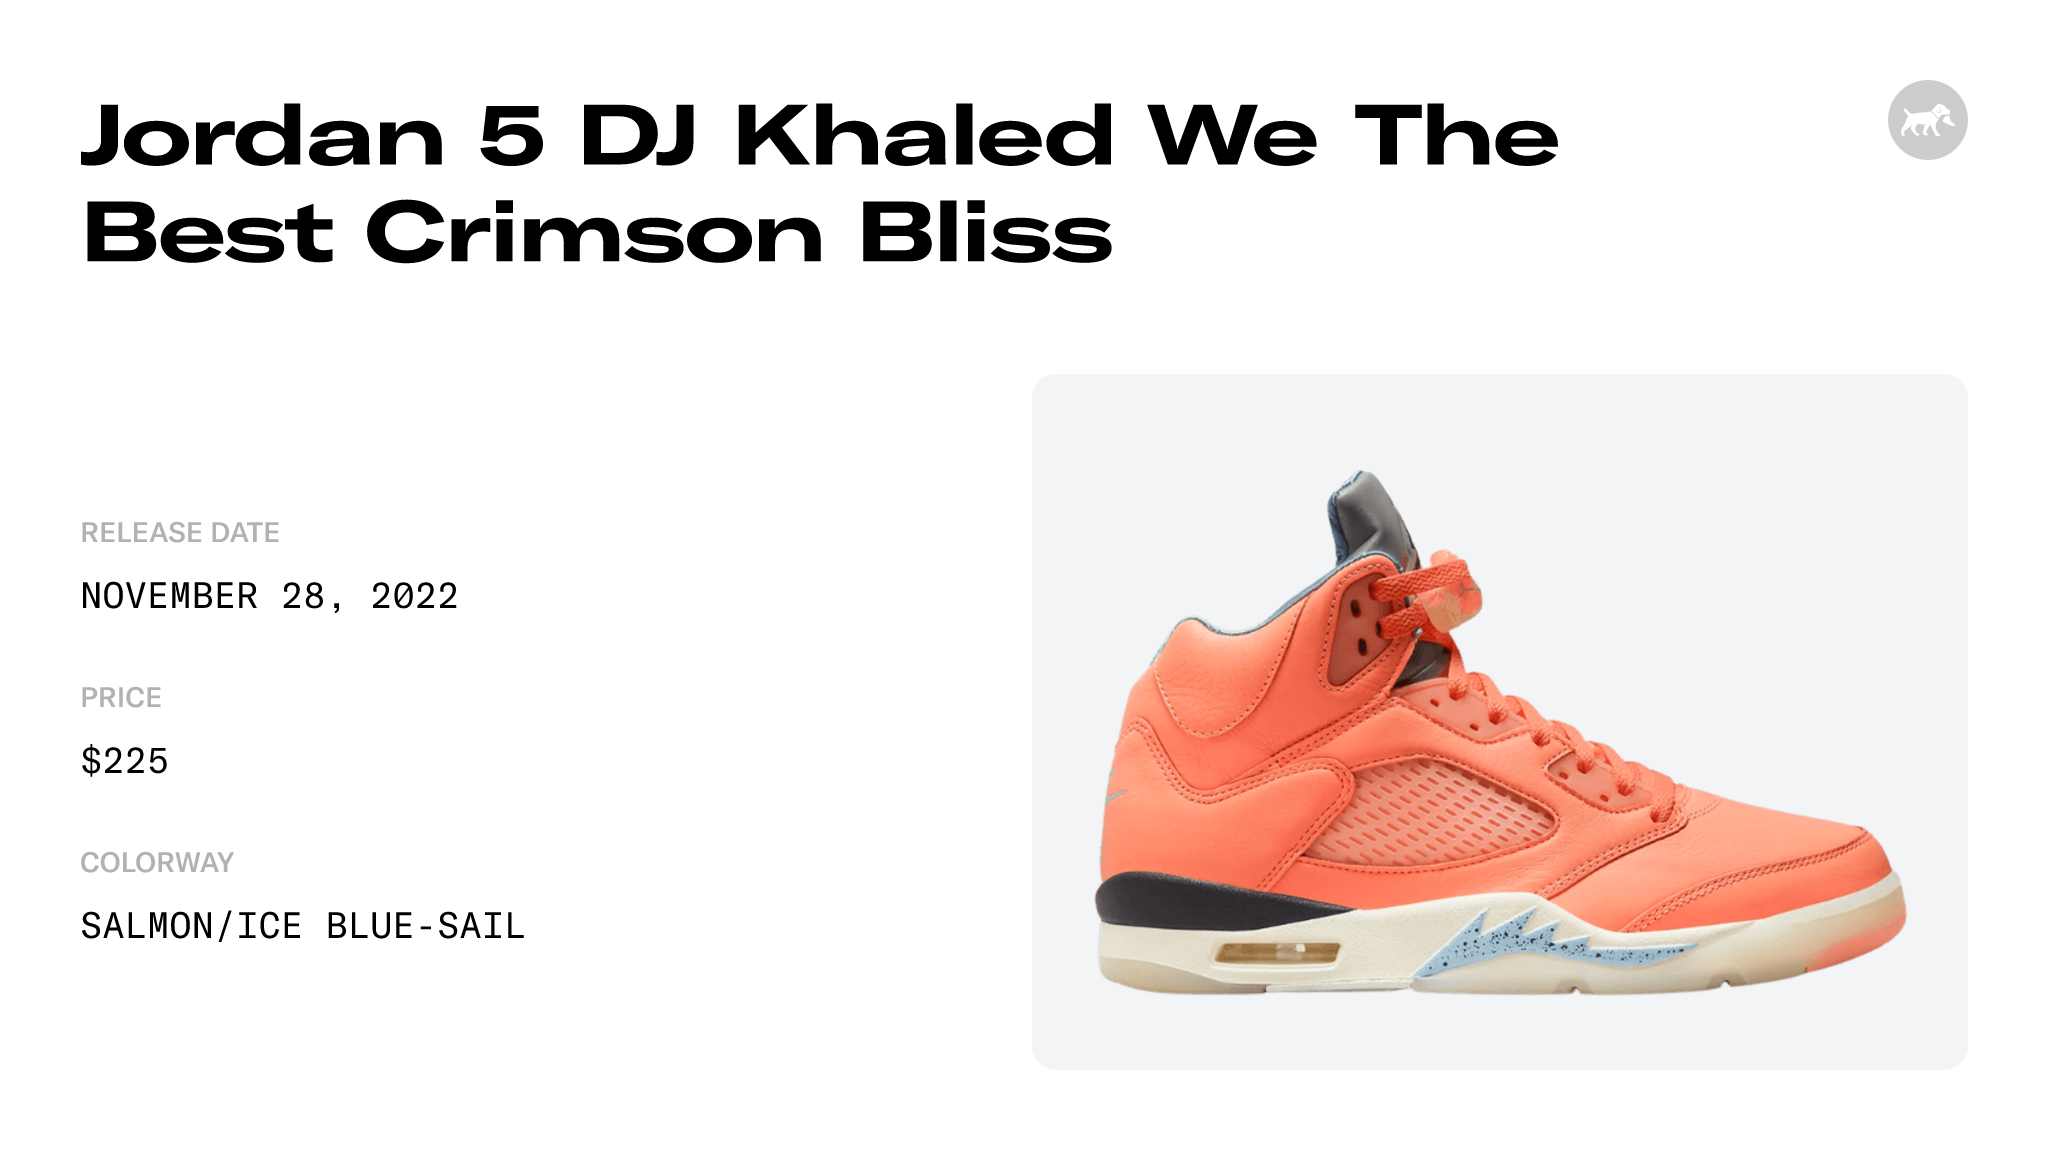 Jordan 5 DJ Khaled We The Best Sail Raffles and Release Date